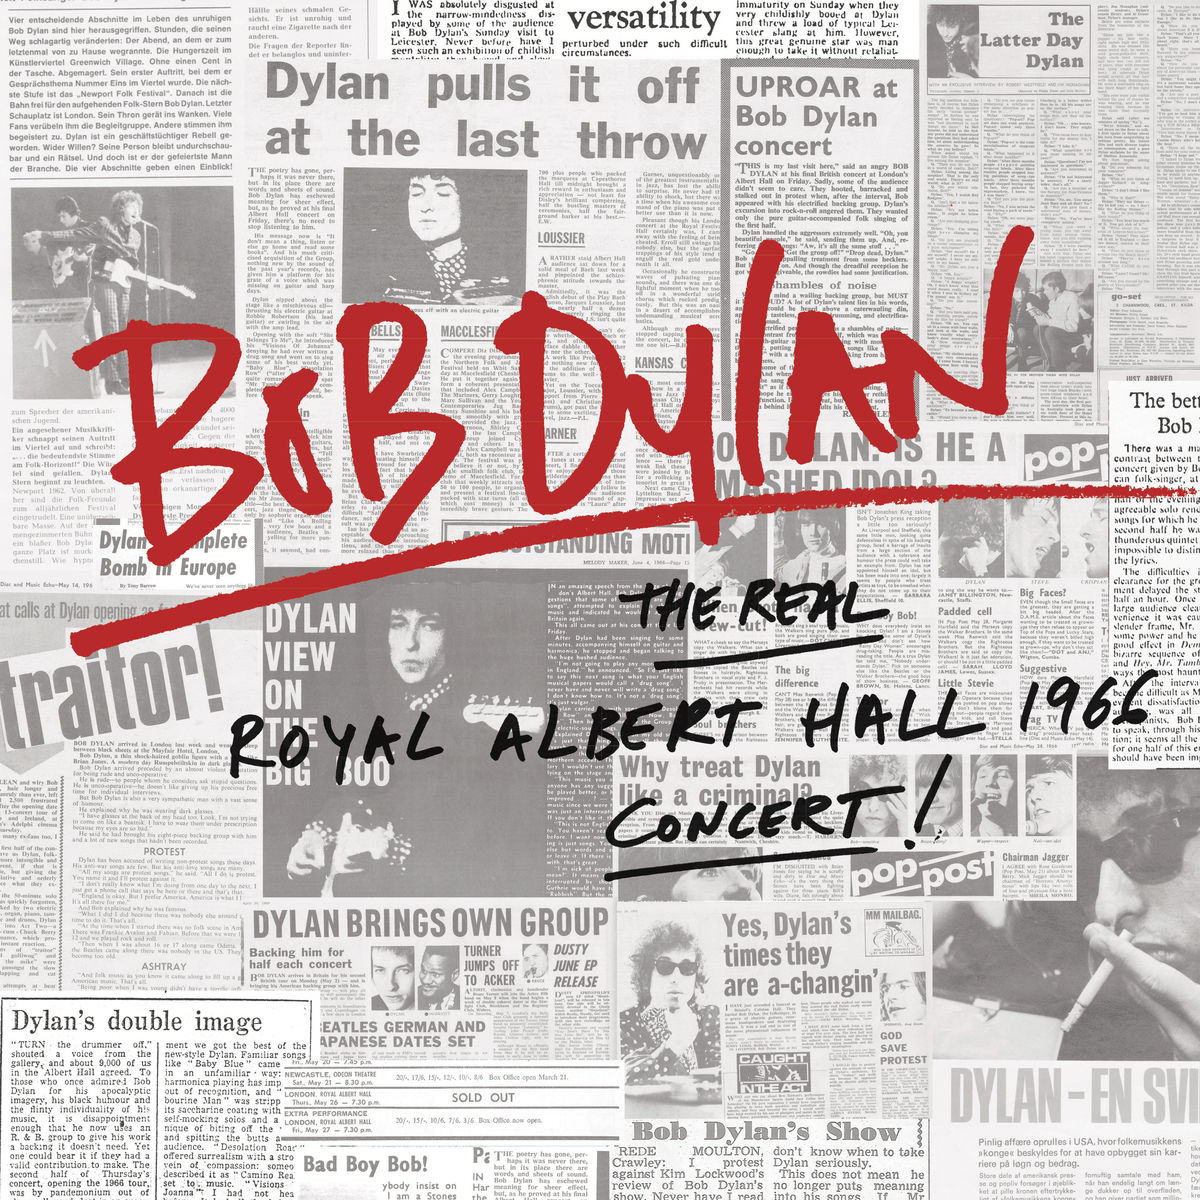 Bob Dylan – The Real Royal Albert Hall 1966 Concert (2016) [HDTracks FLAC 24bit/96kHz]